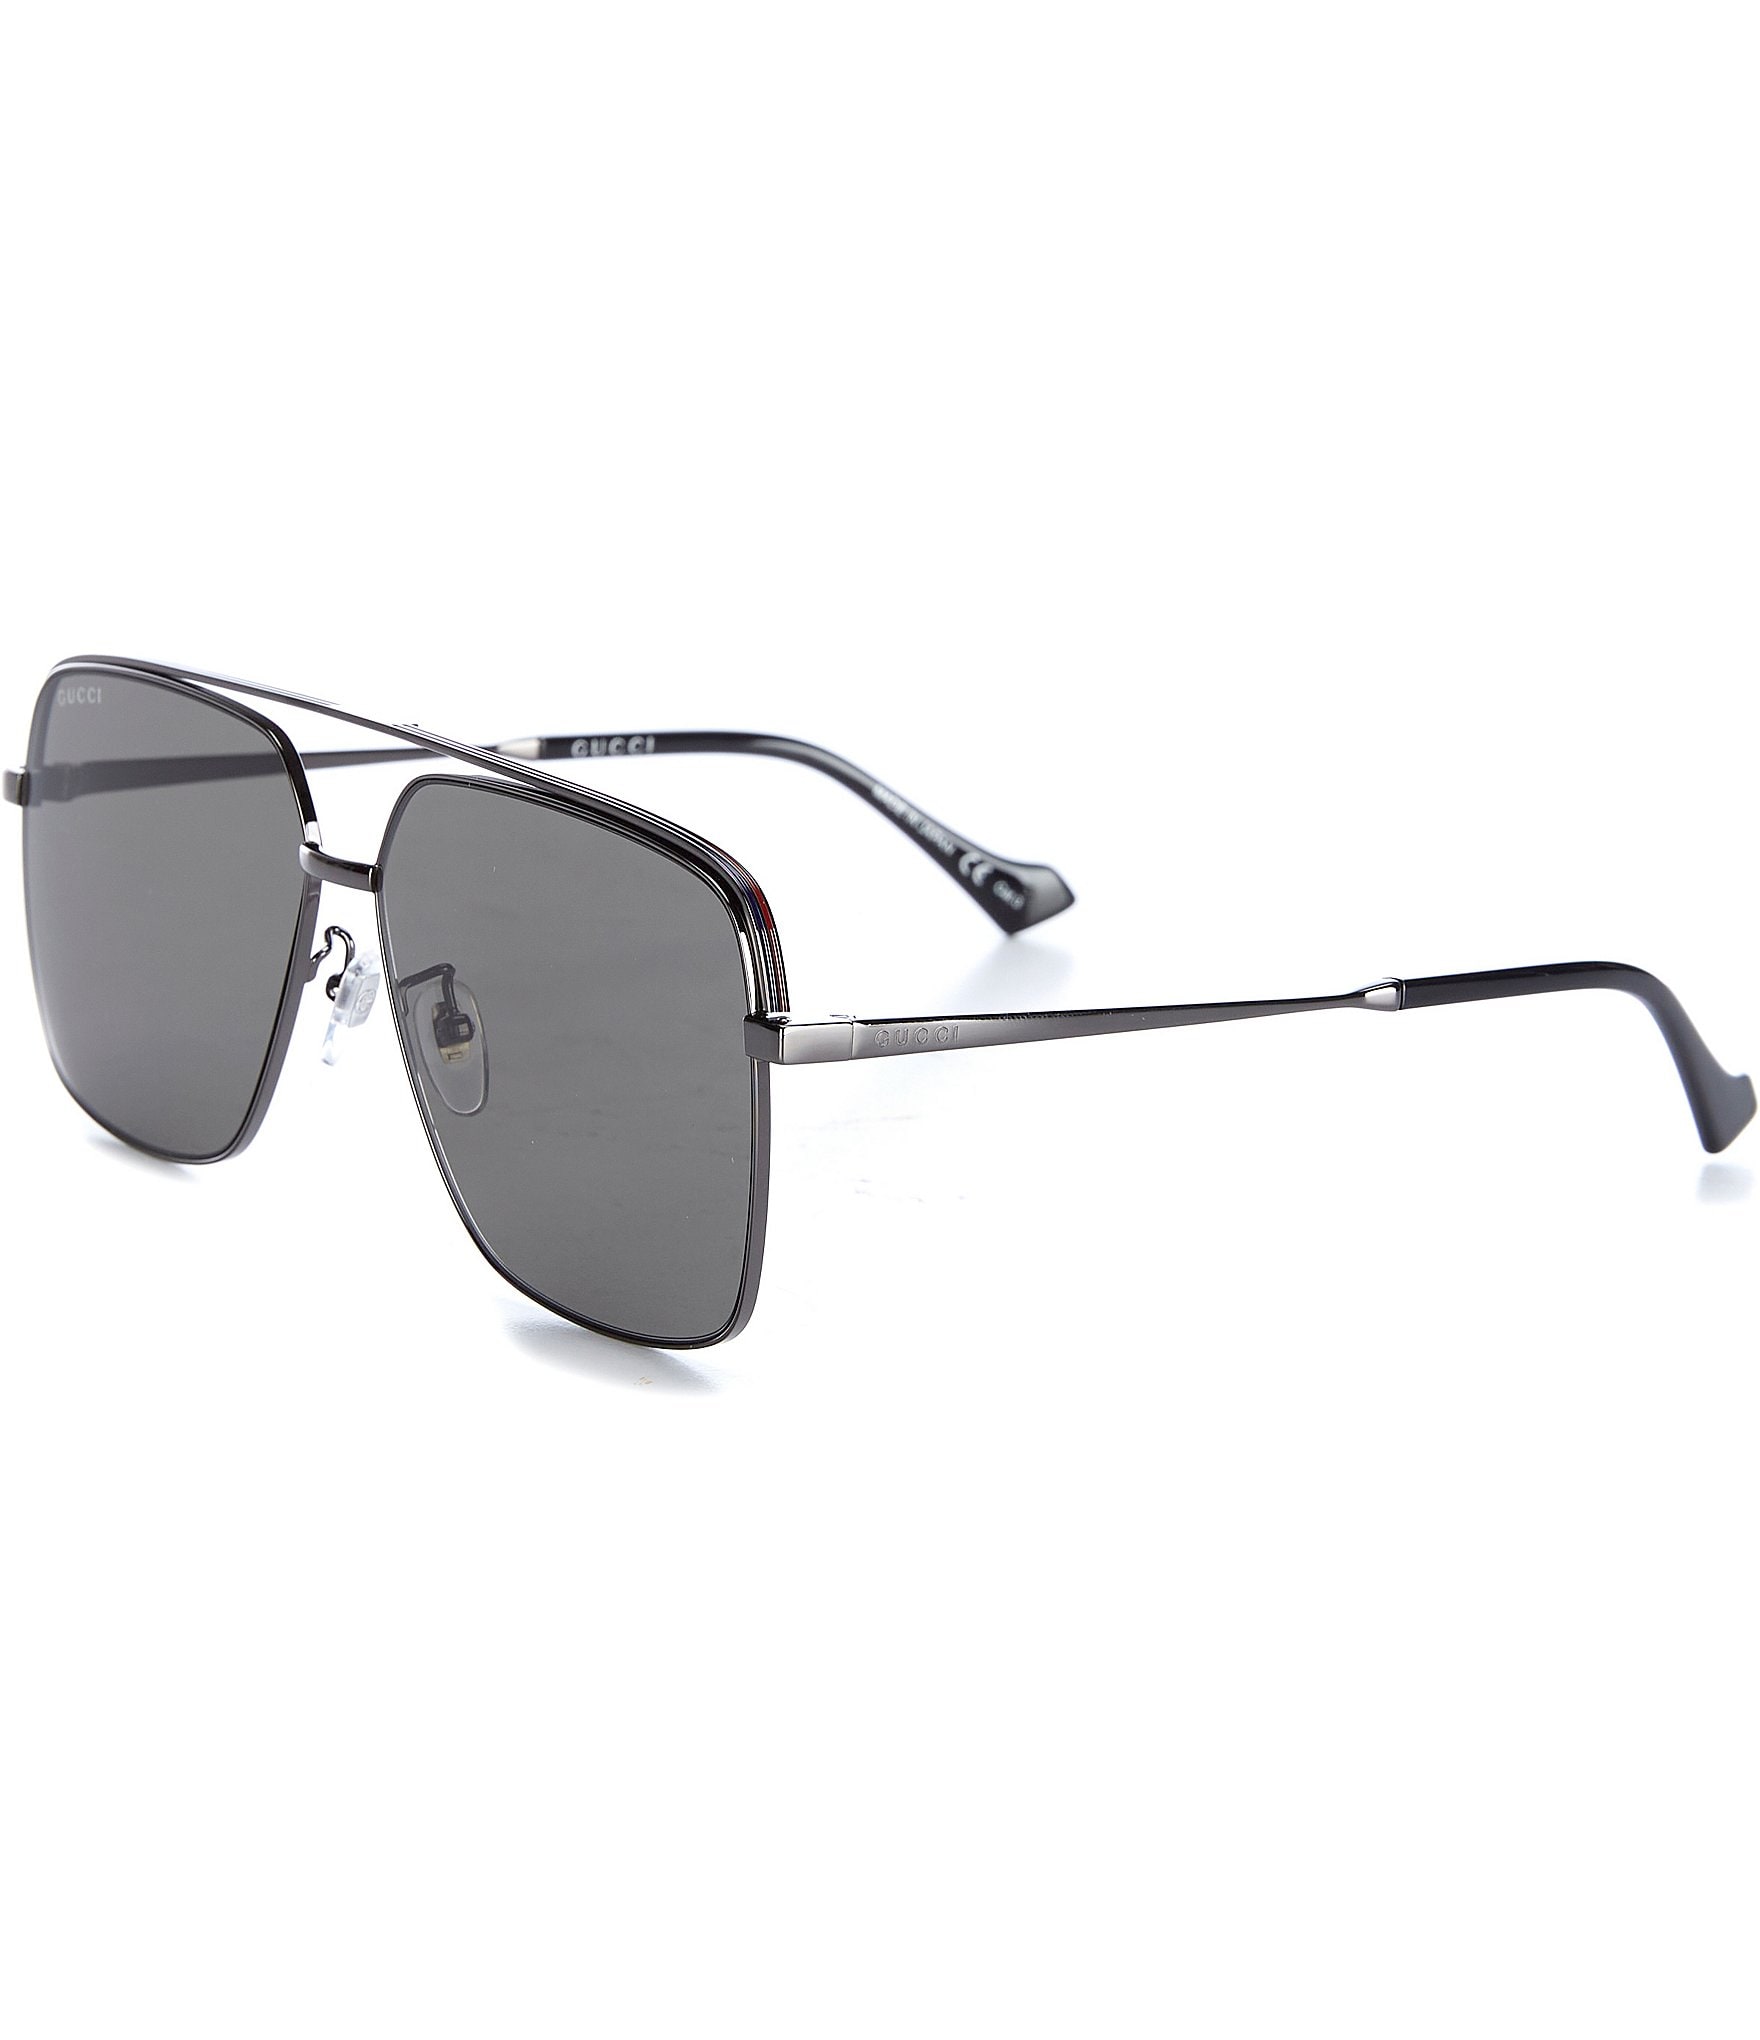 Versace Unisex Ve2249 65mm Standard Aviator Sunglasses